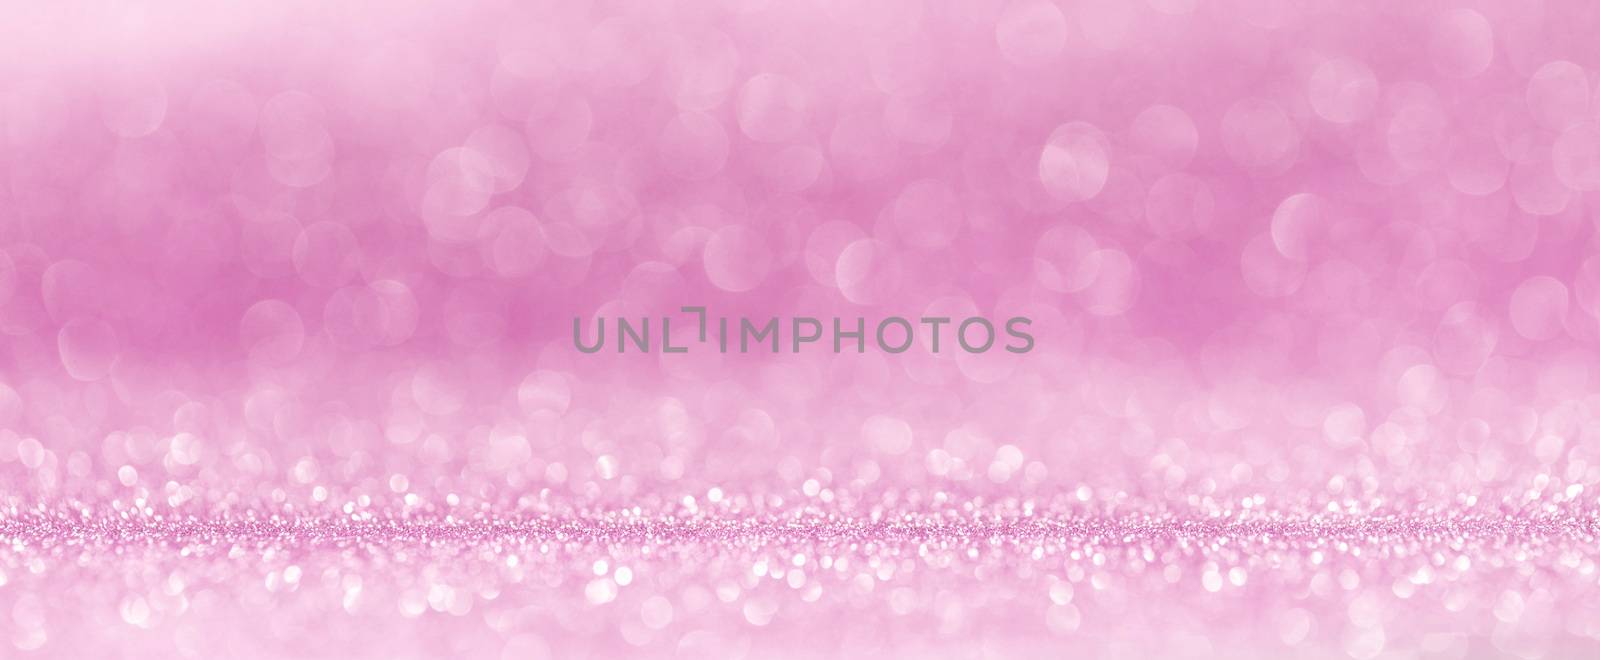 Shiny pink lights background by Yellowj